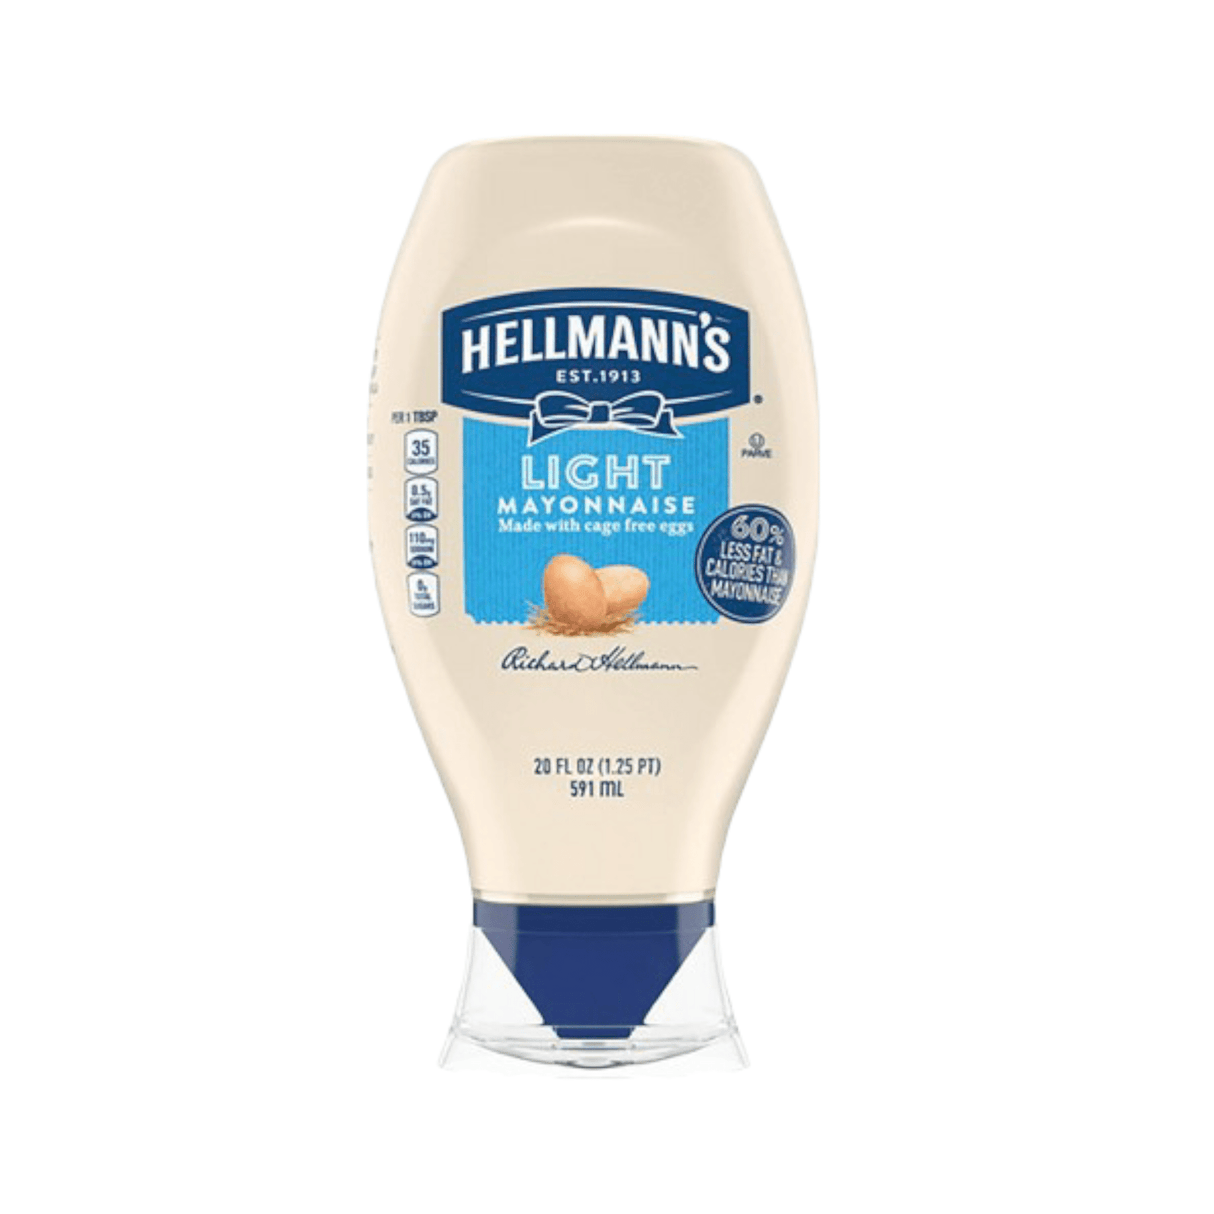 Hellmann's Light Mayonnaise 60% Less Fat